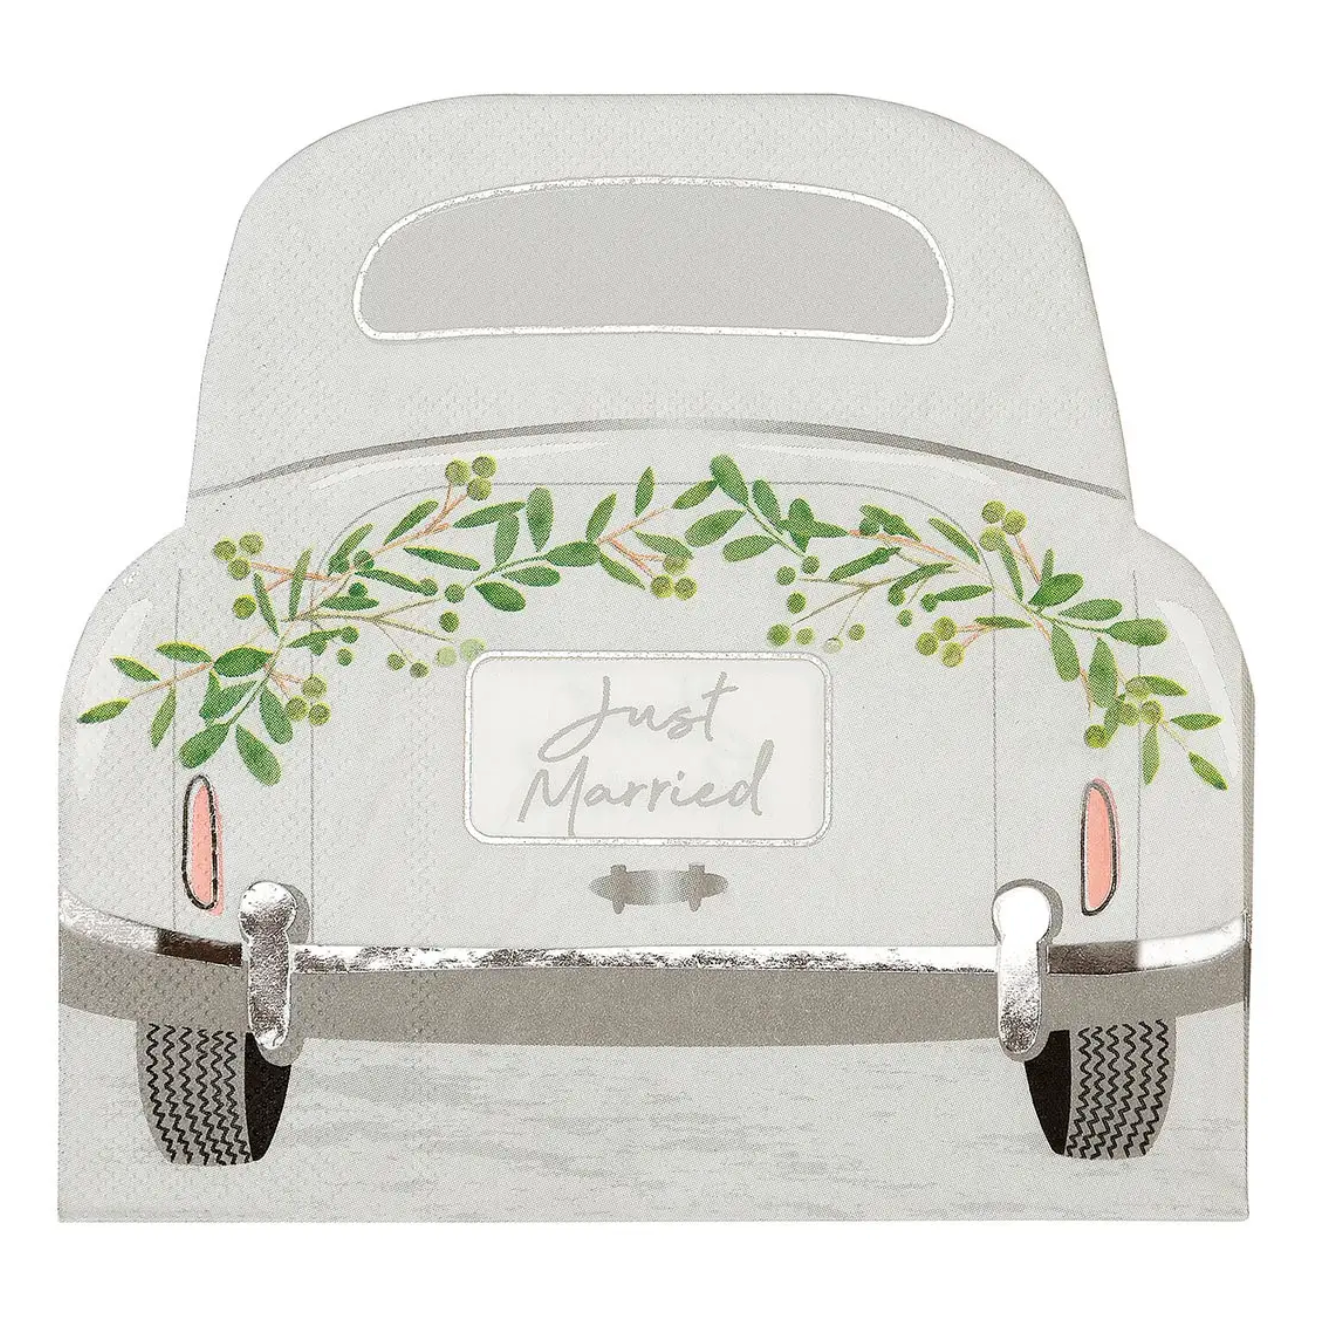 Botanical Bride 'Just Married' Car Shaped Napkins - 16 pk